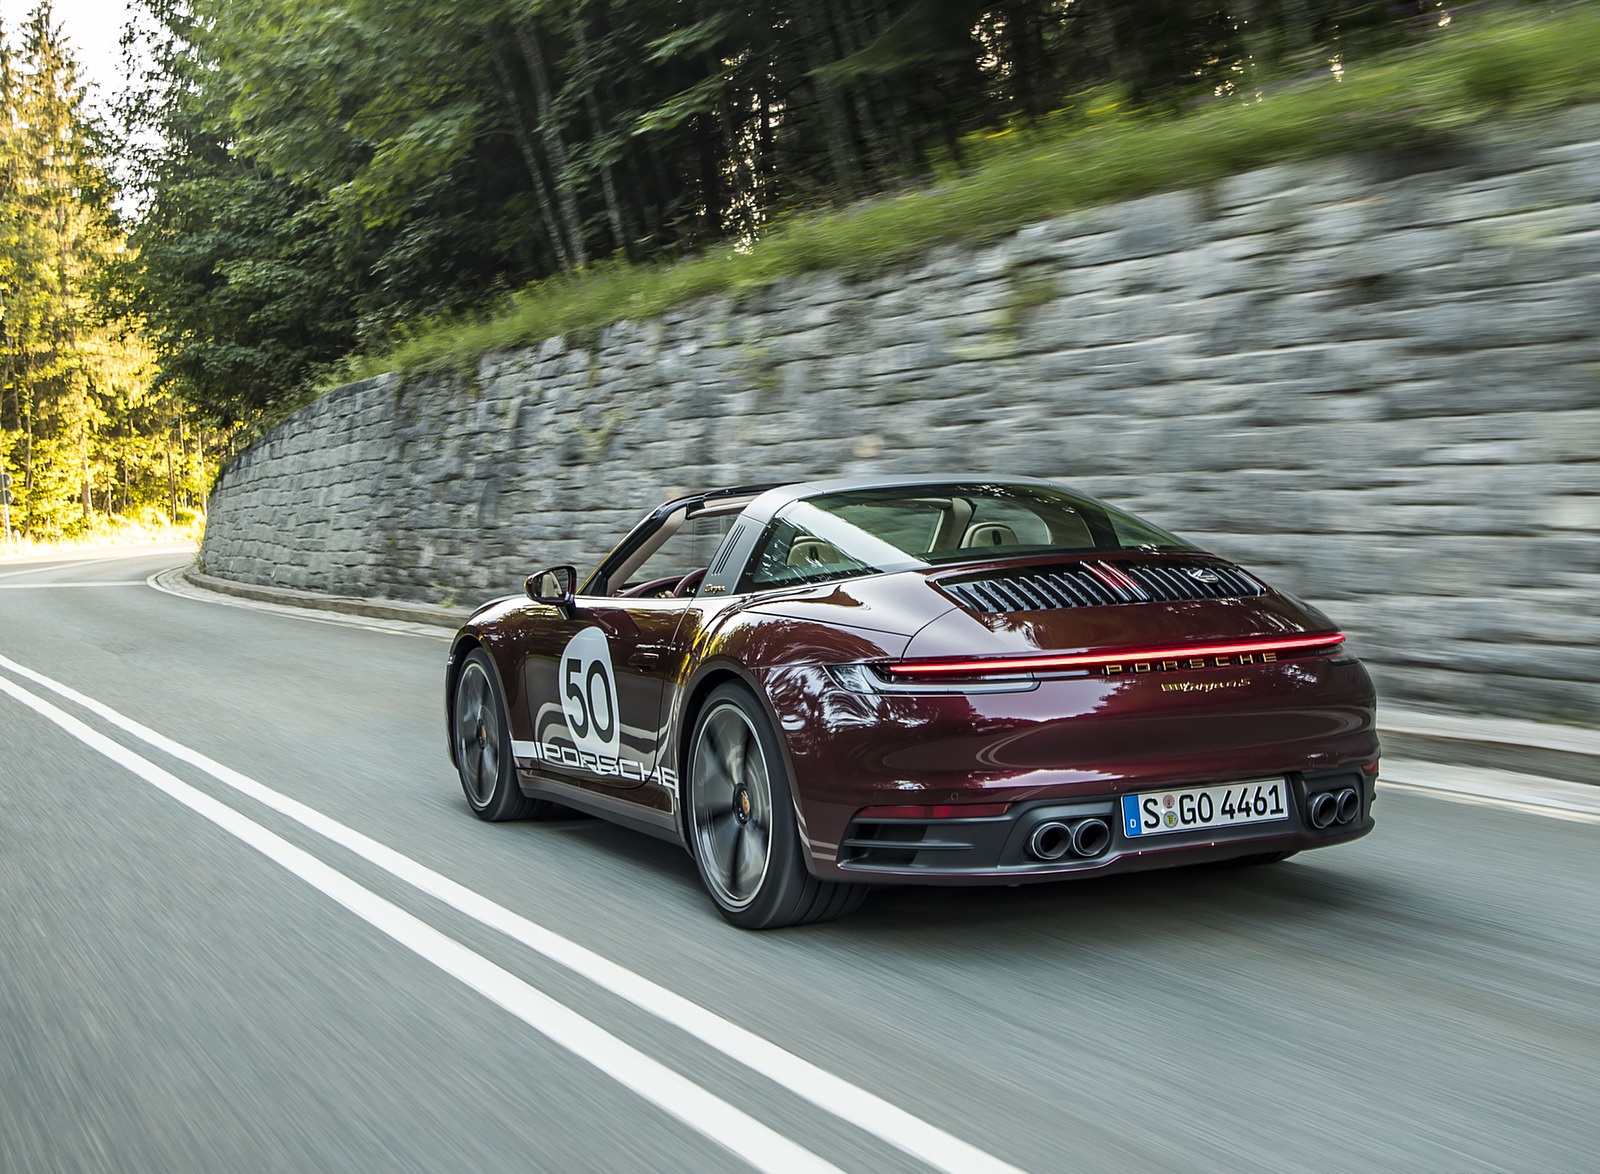 2021 Porsche 911 Targa 4S Heritage Design Edition (Color: Cherry Metallic) Rear Three-Quarter Wallpapers #13 of 82